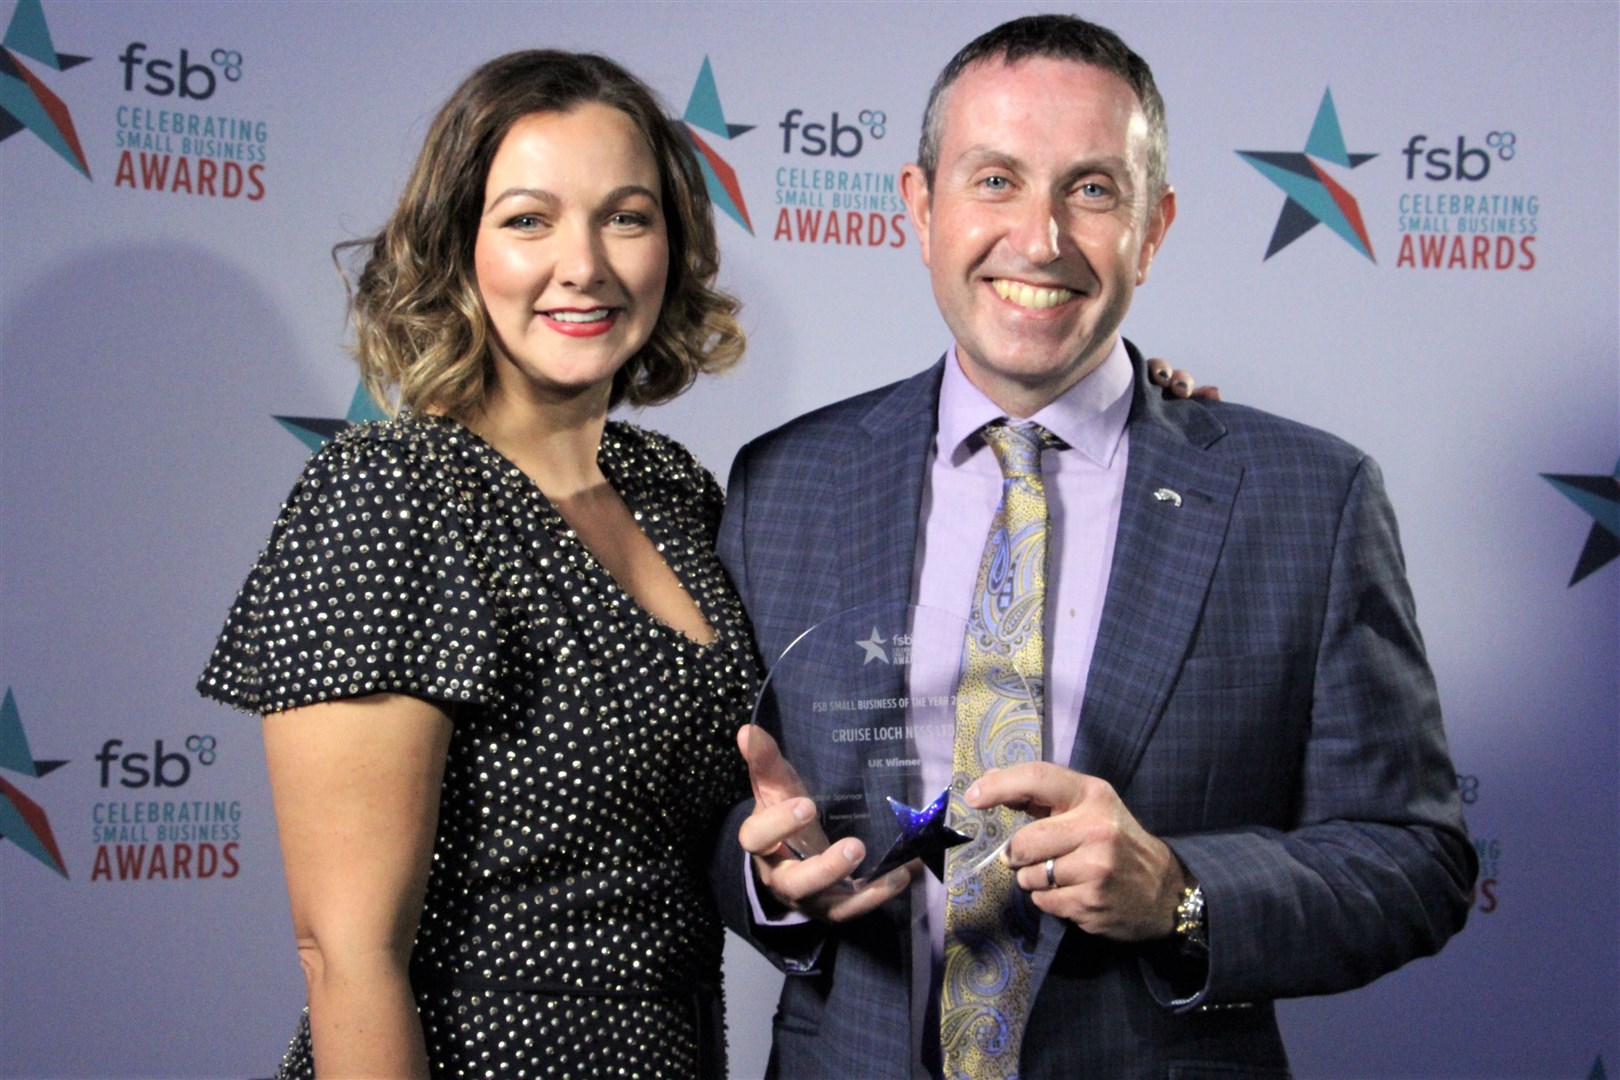 Debbie and Ronald Mackenzie of Cruise Loch Ness were UK FSB winners in 2019.